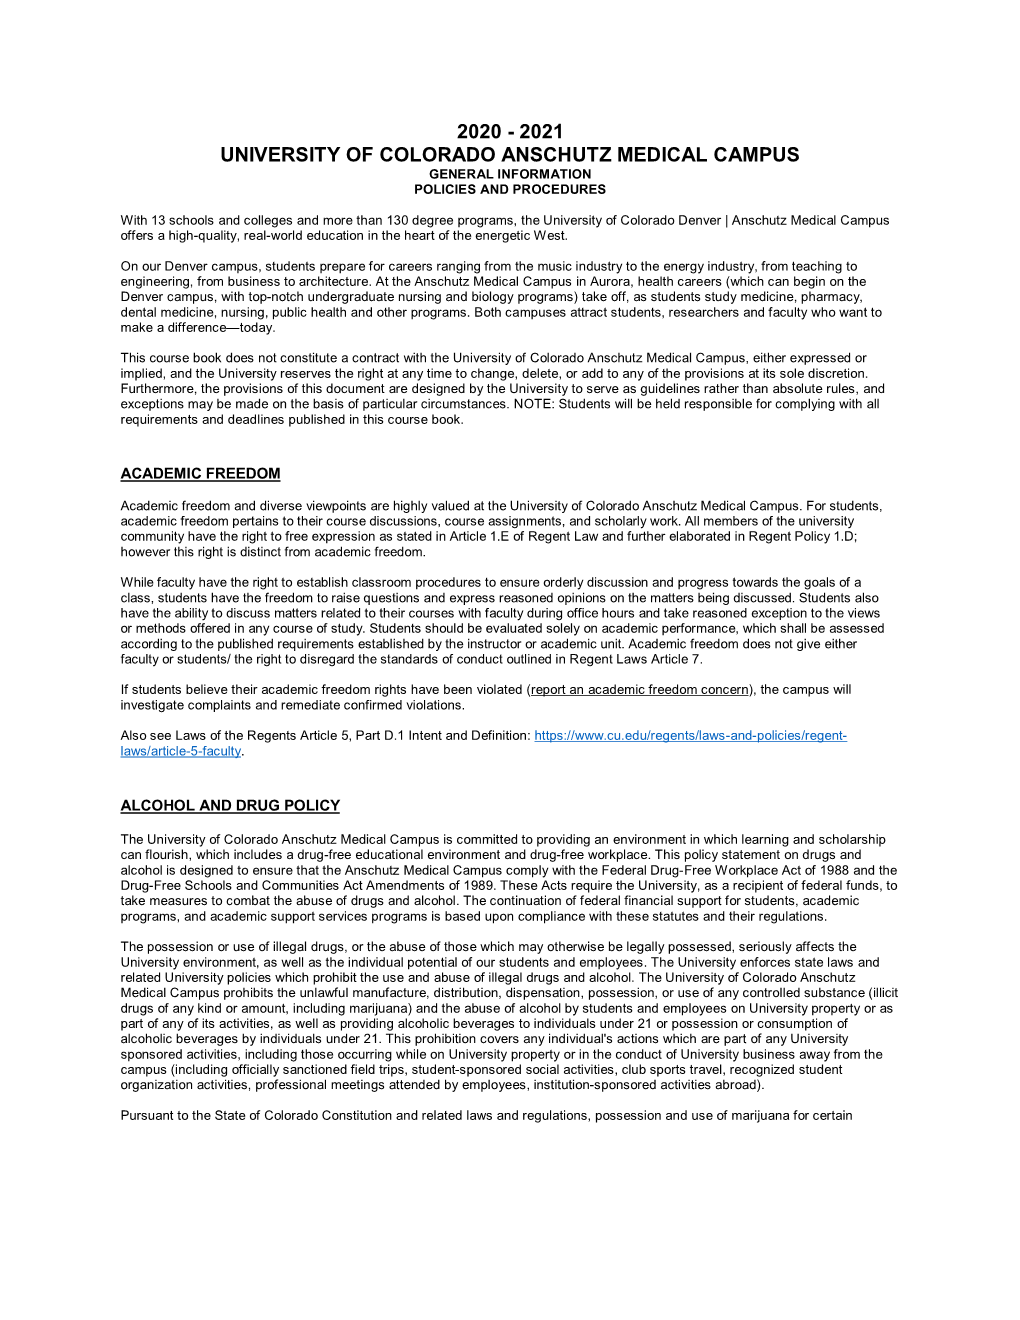 2020 - 2021 University of Colorado Anschutz Medical Campus General Information Policies and Procedures